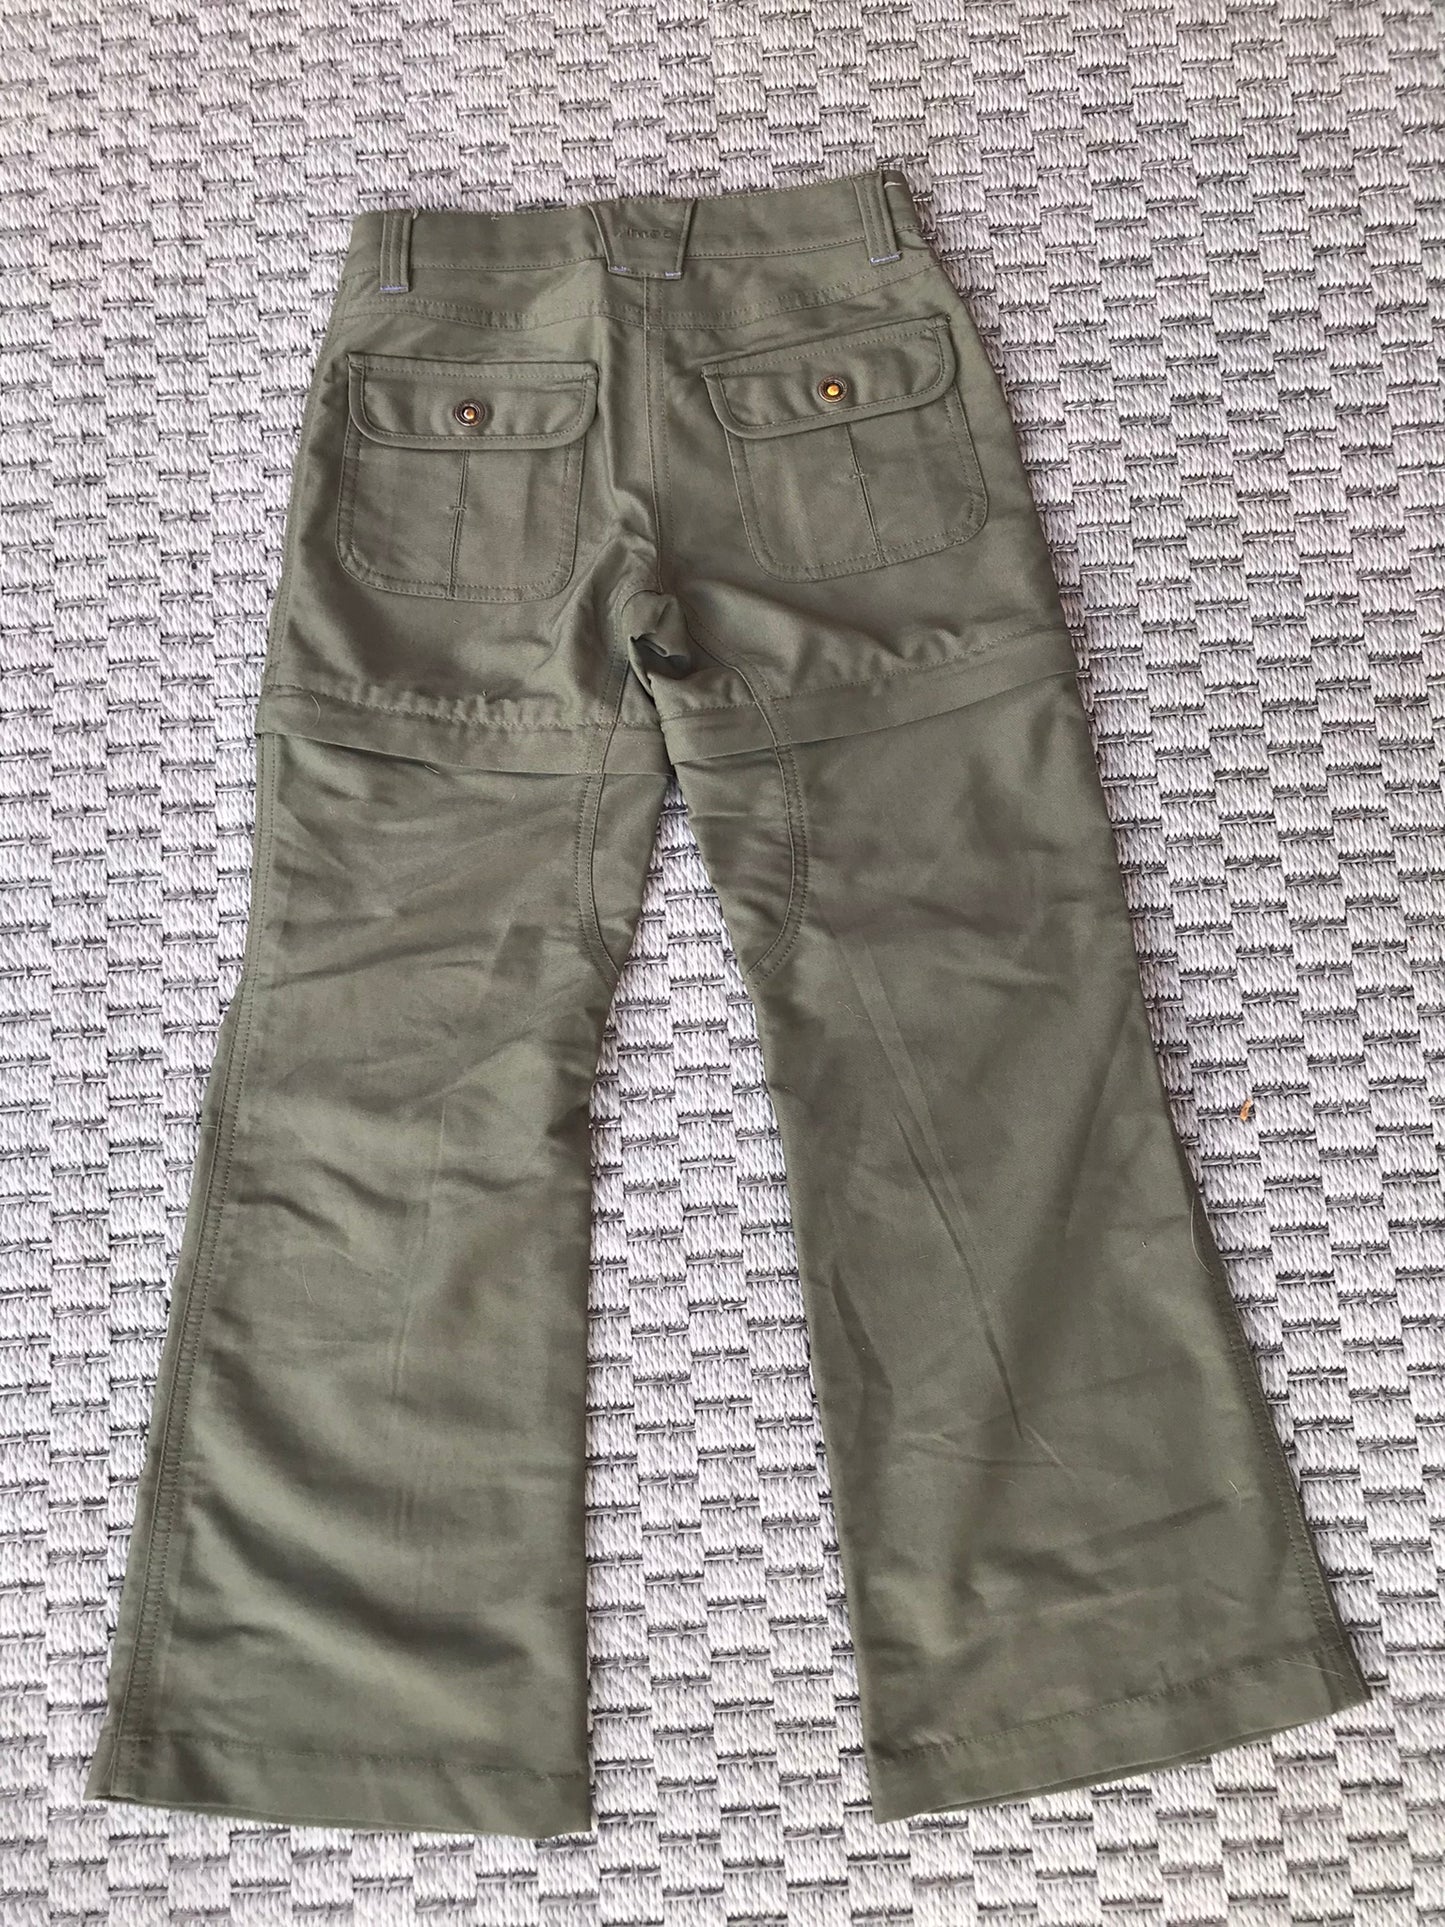 MEC Hiking Pants Child Size 8 Khaki With Zipper Removable Leg for Shorts